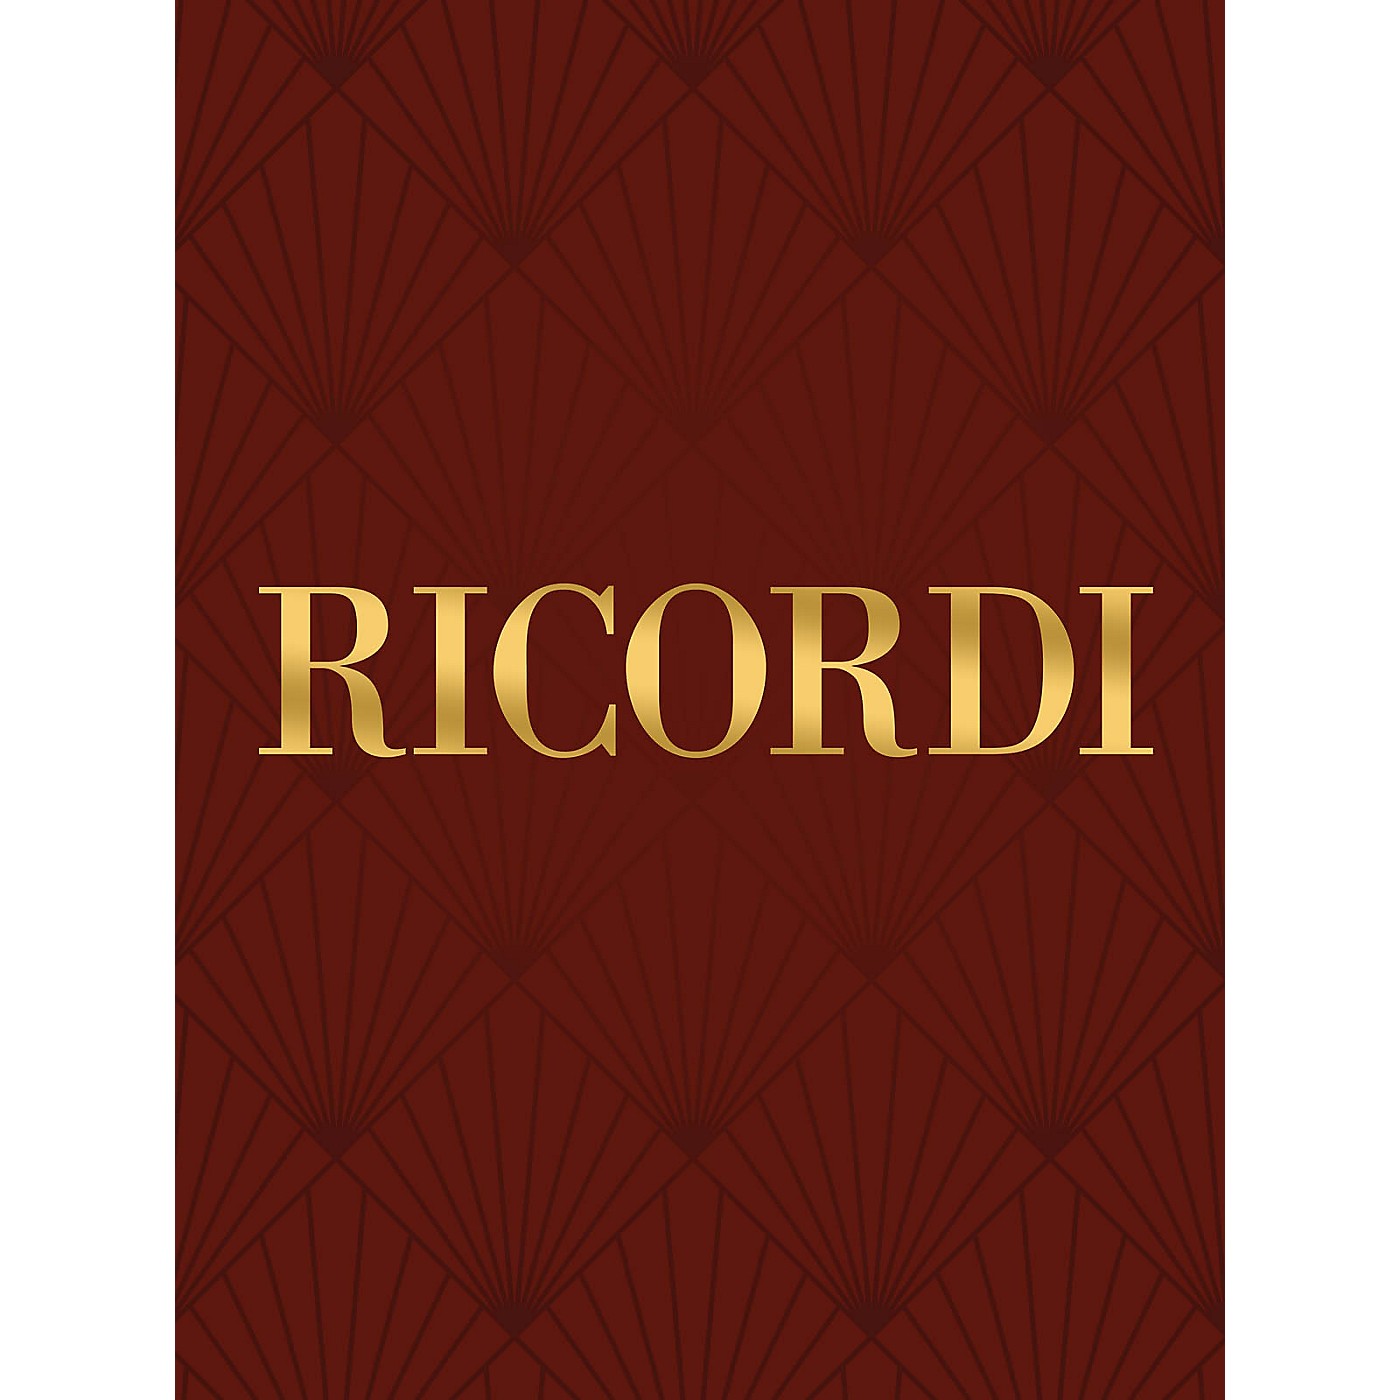 Ricordi 5 Sonate Facili (5 Easy Sonatas) Piano Large Works Composed by Muzio Clementi Edited by Riccardo Risalti thumbnail